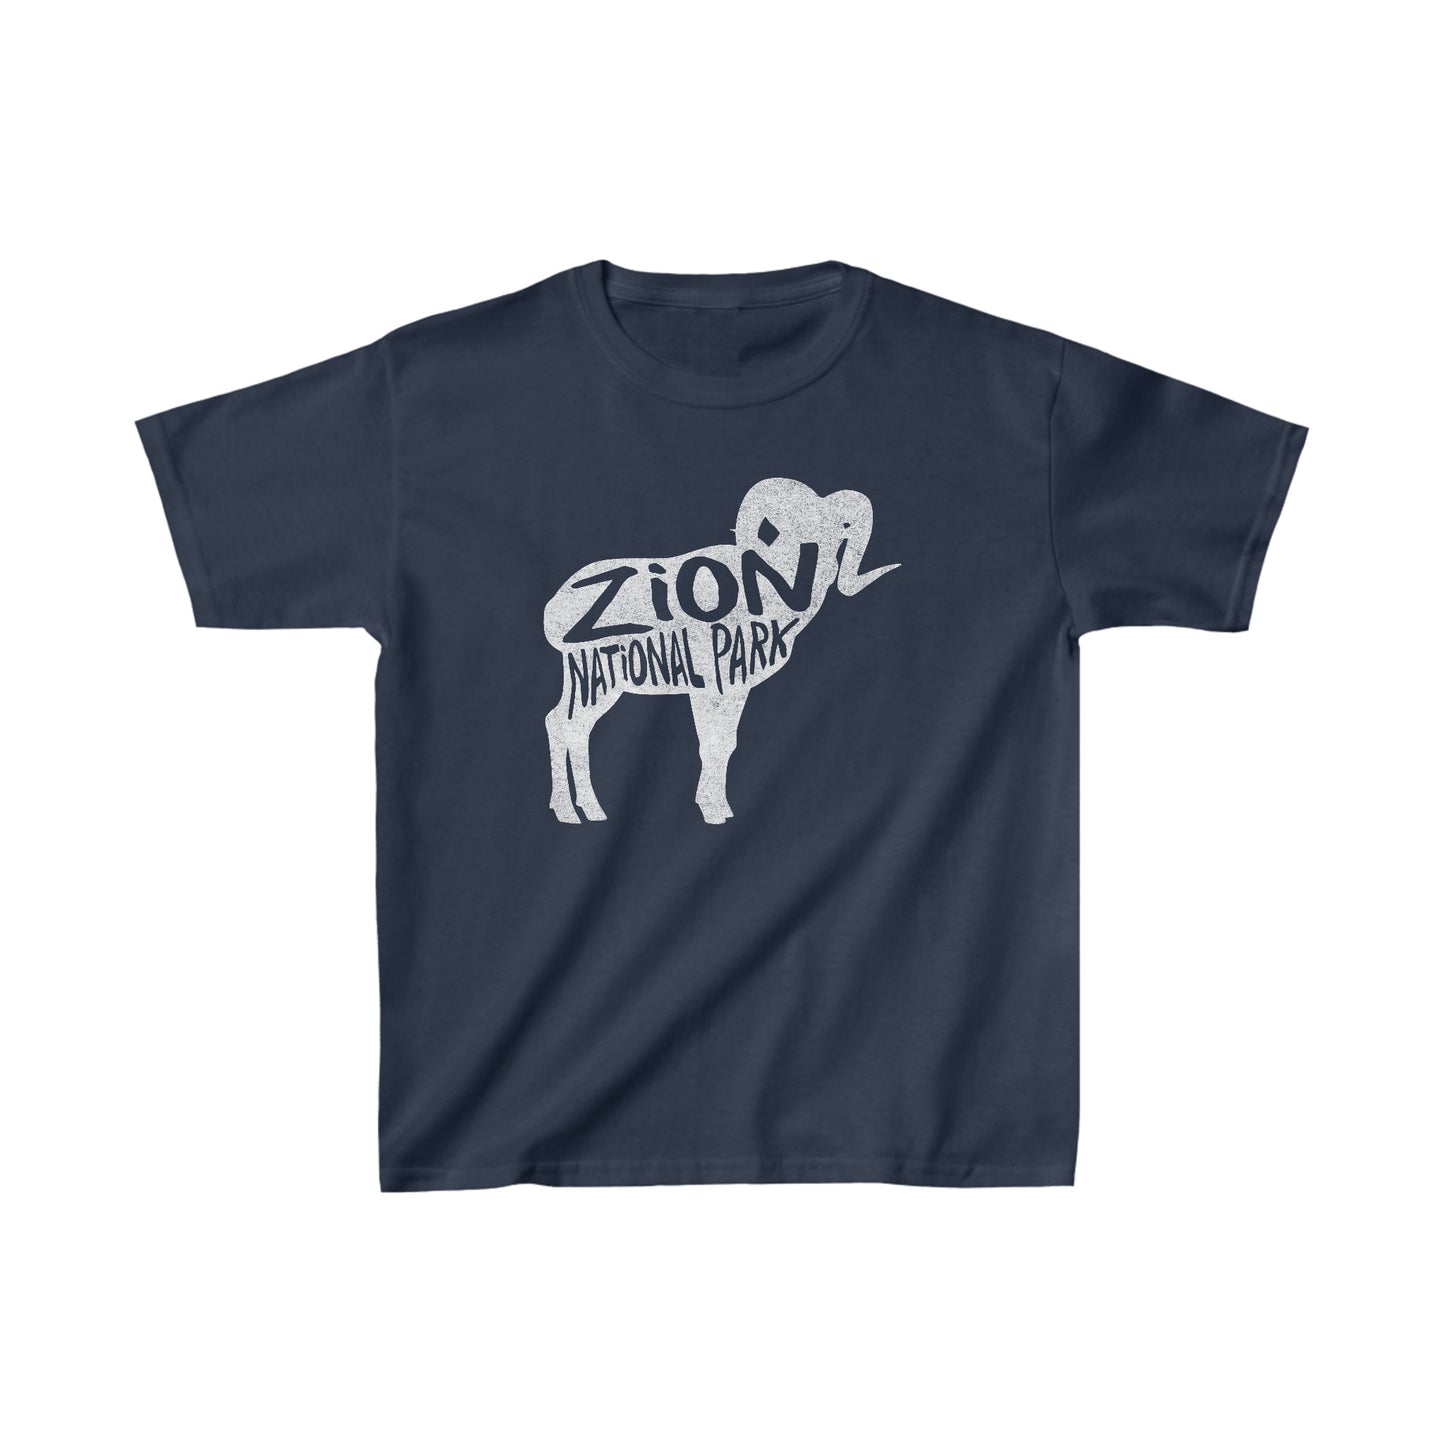 Zion National Park Child T-Shirt - Bighorn Sheep Chunky Text